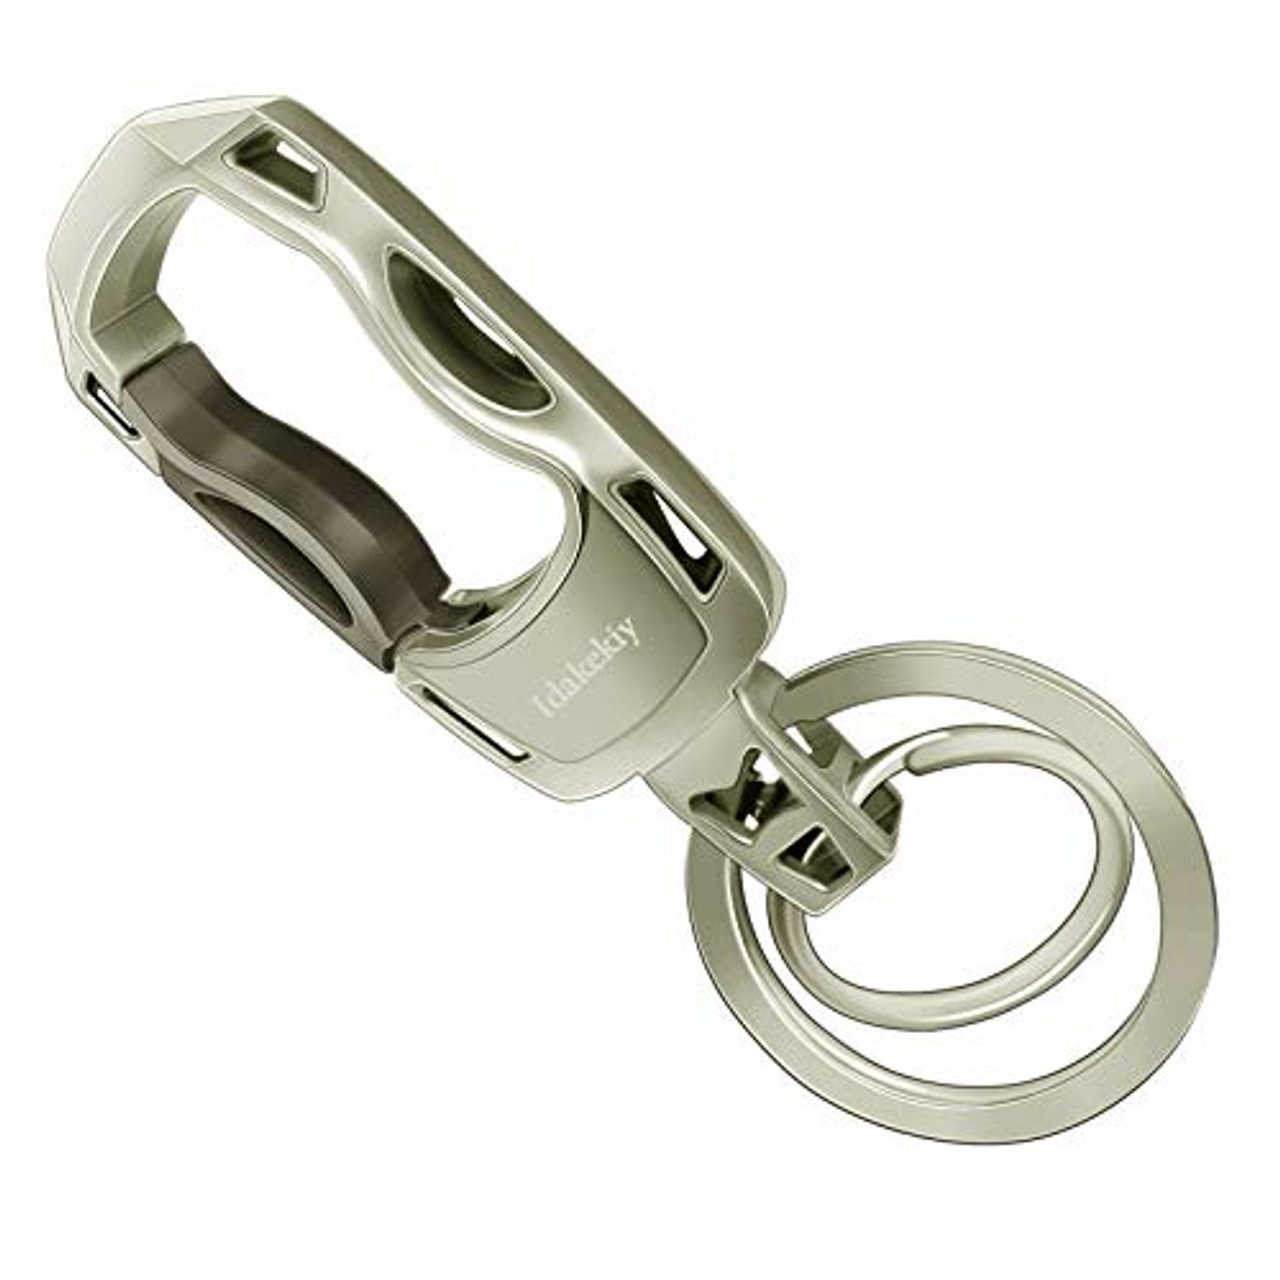 Heavy Duty Key Chain With 2 Key Rings Detachable Car Key Holder Multifunctional 